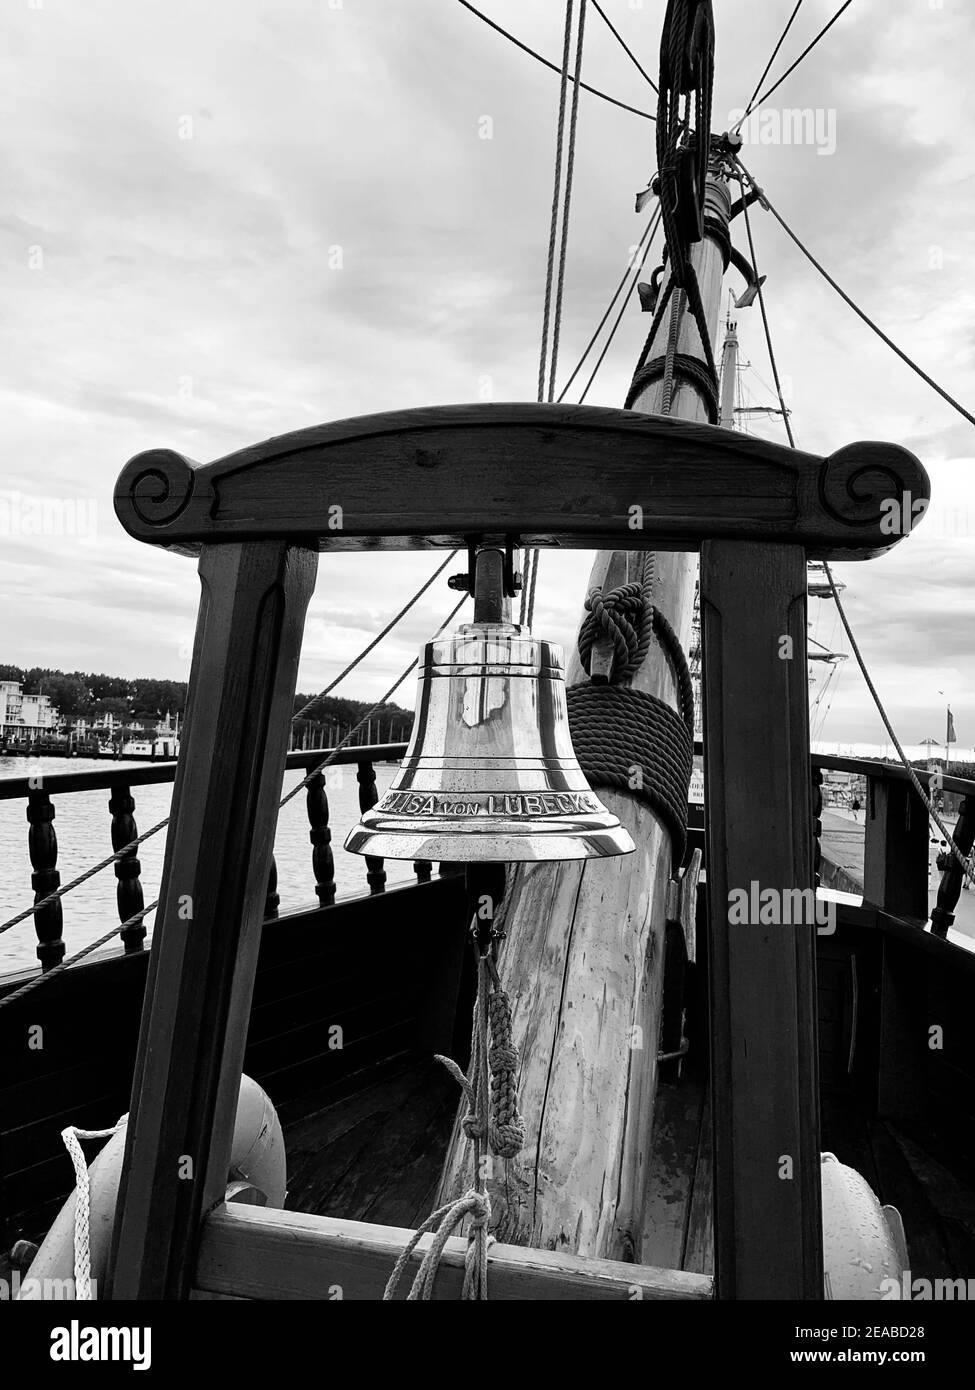 Ship bell of the historic merchant ship Lisa von Lübeck Stock Photo